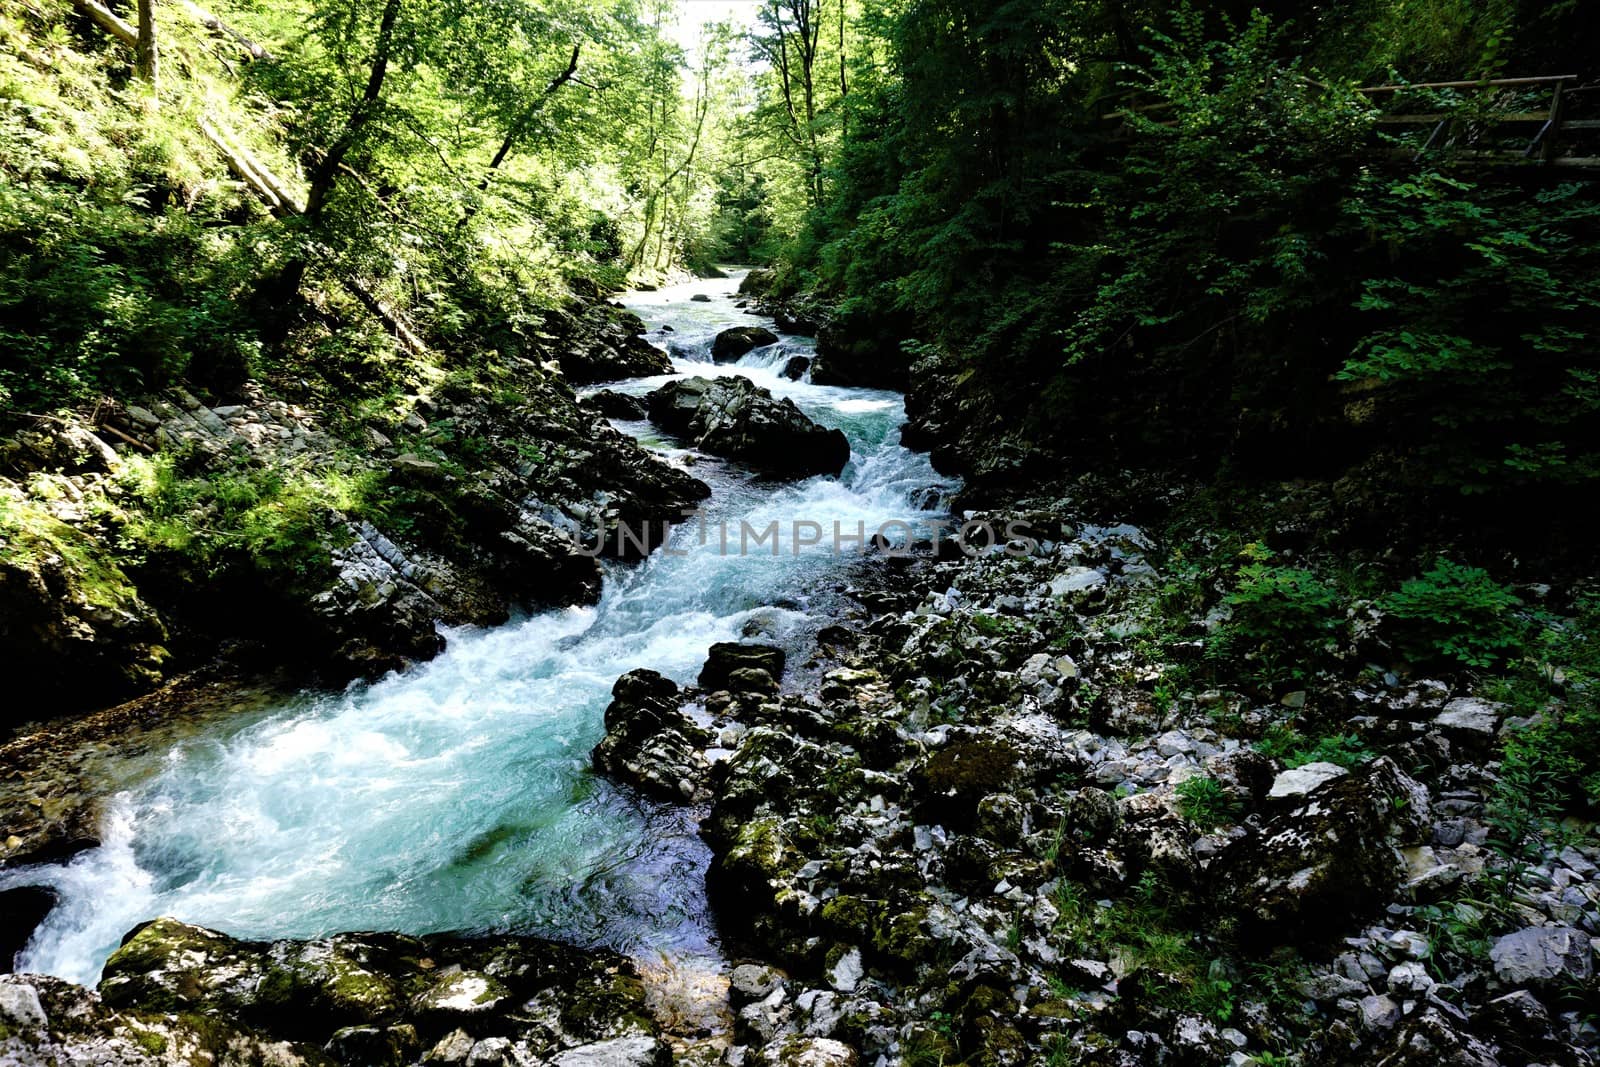 Wild radovna river and rocks in the Vintgar Gorge, Slovenia